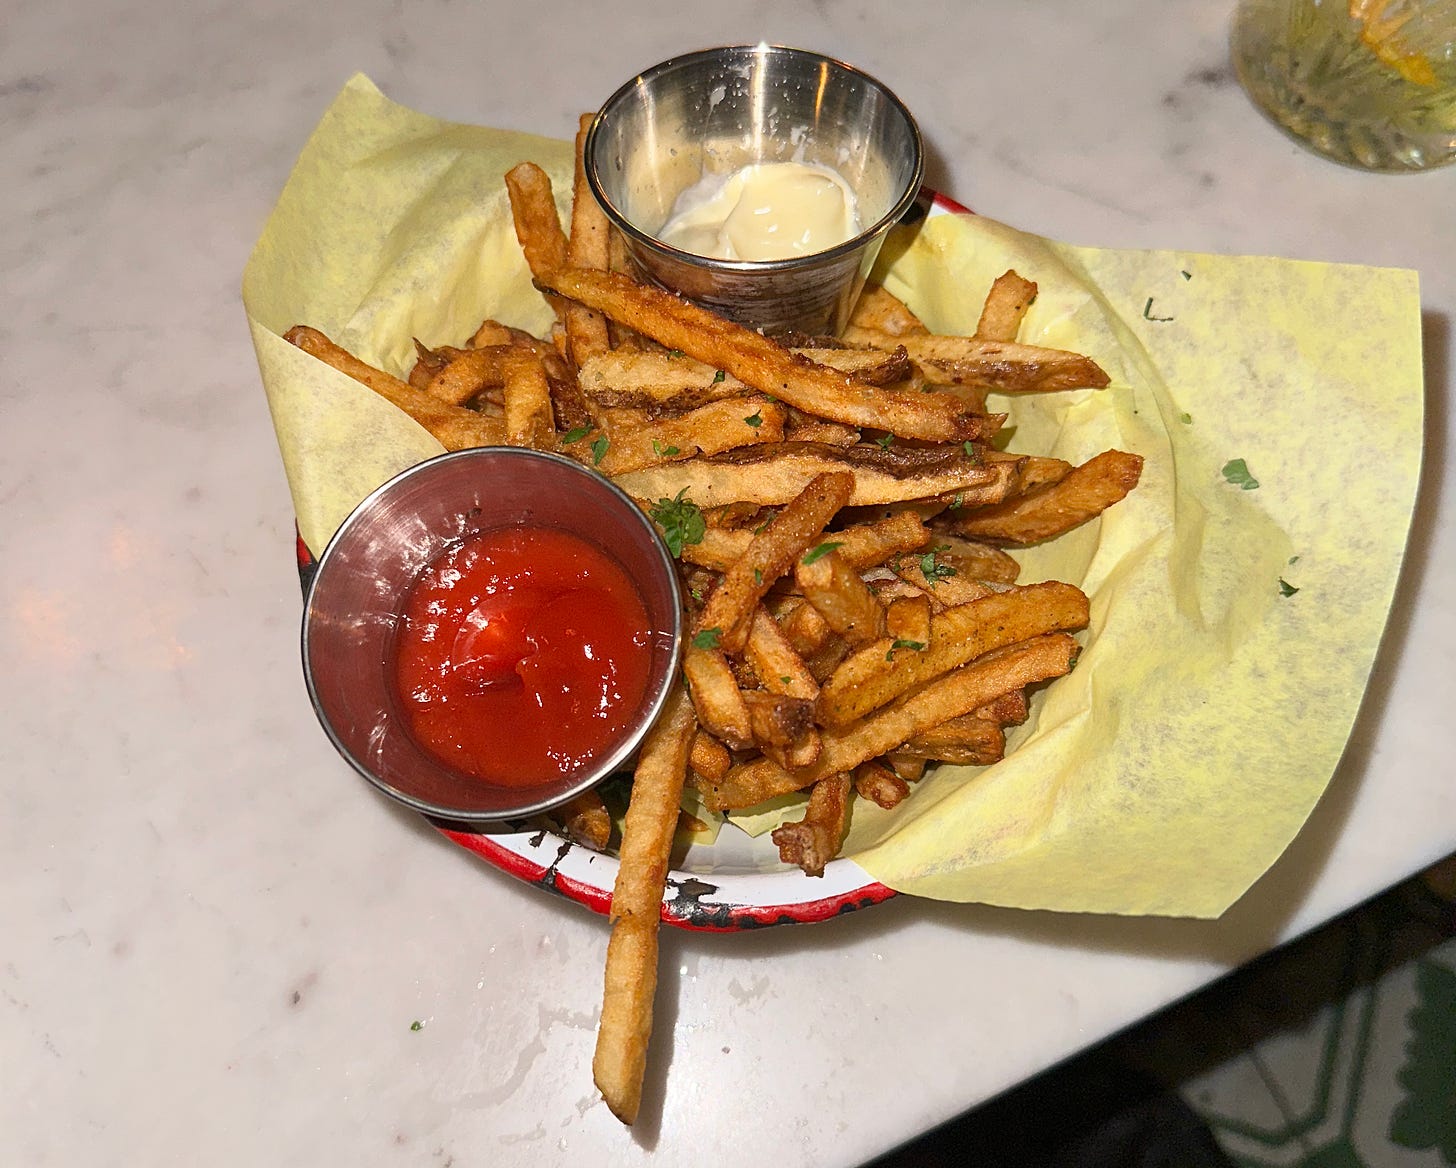 L & E Oyster Bar's fries